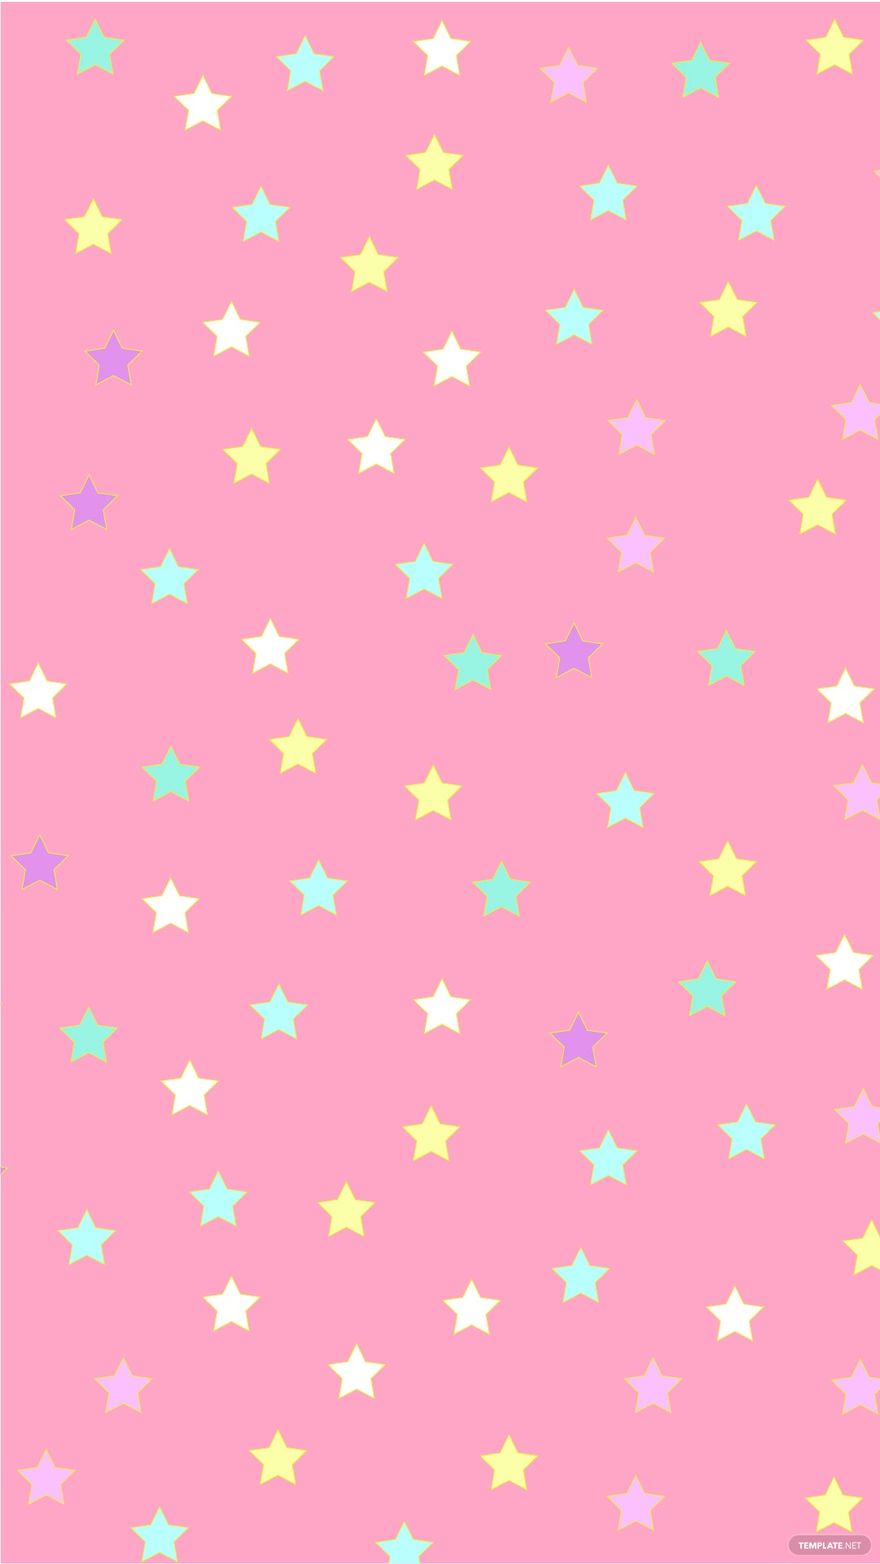 Free Pastel Pink Background With Stars - EPS, Illustrator, JPG, SVG |  